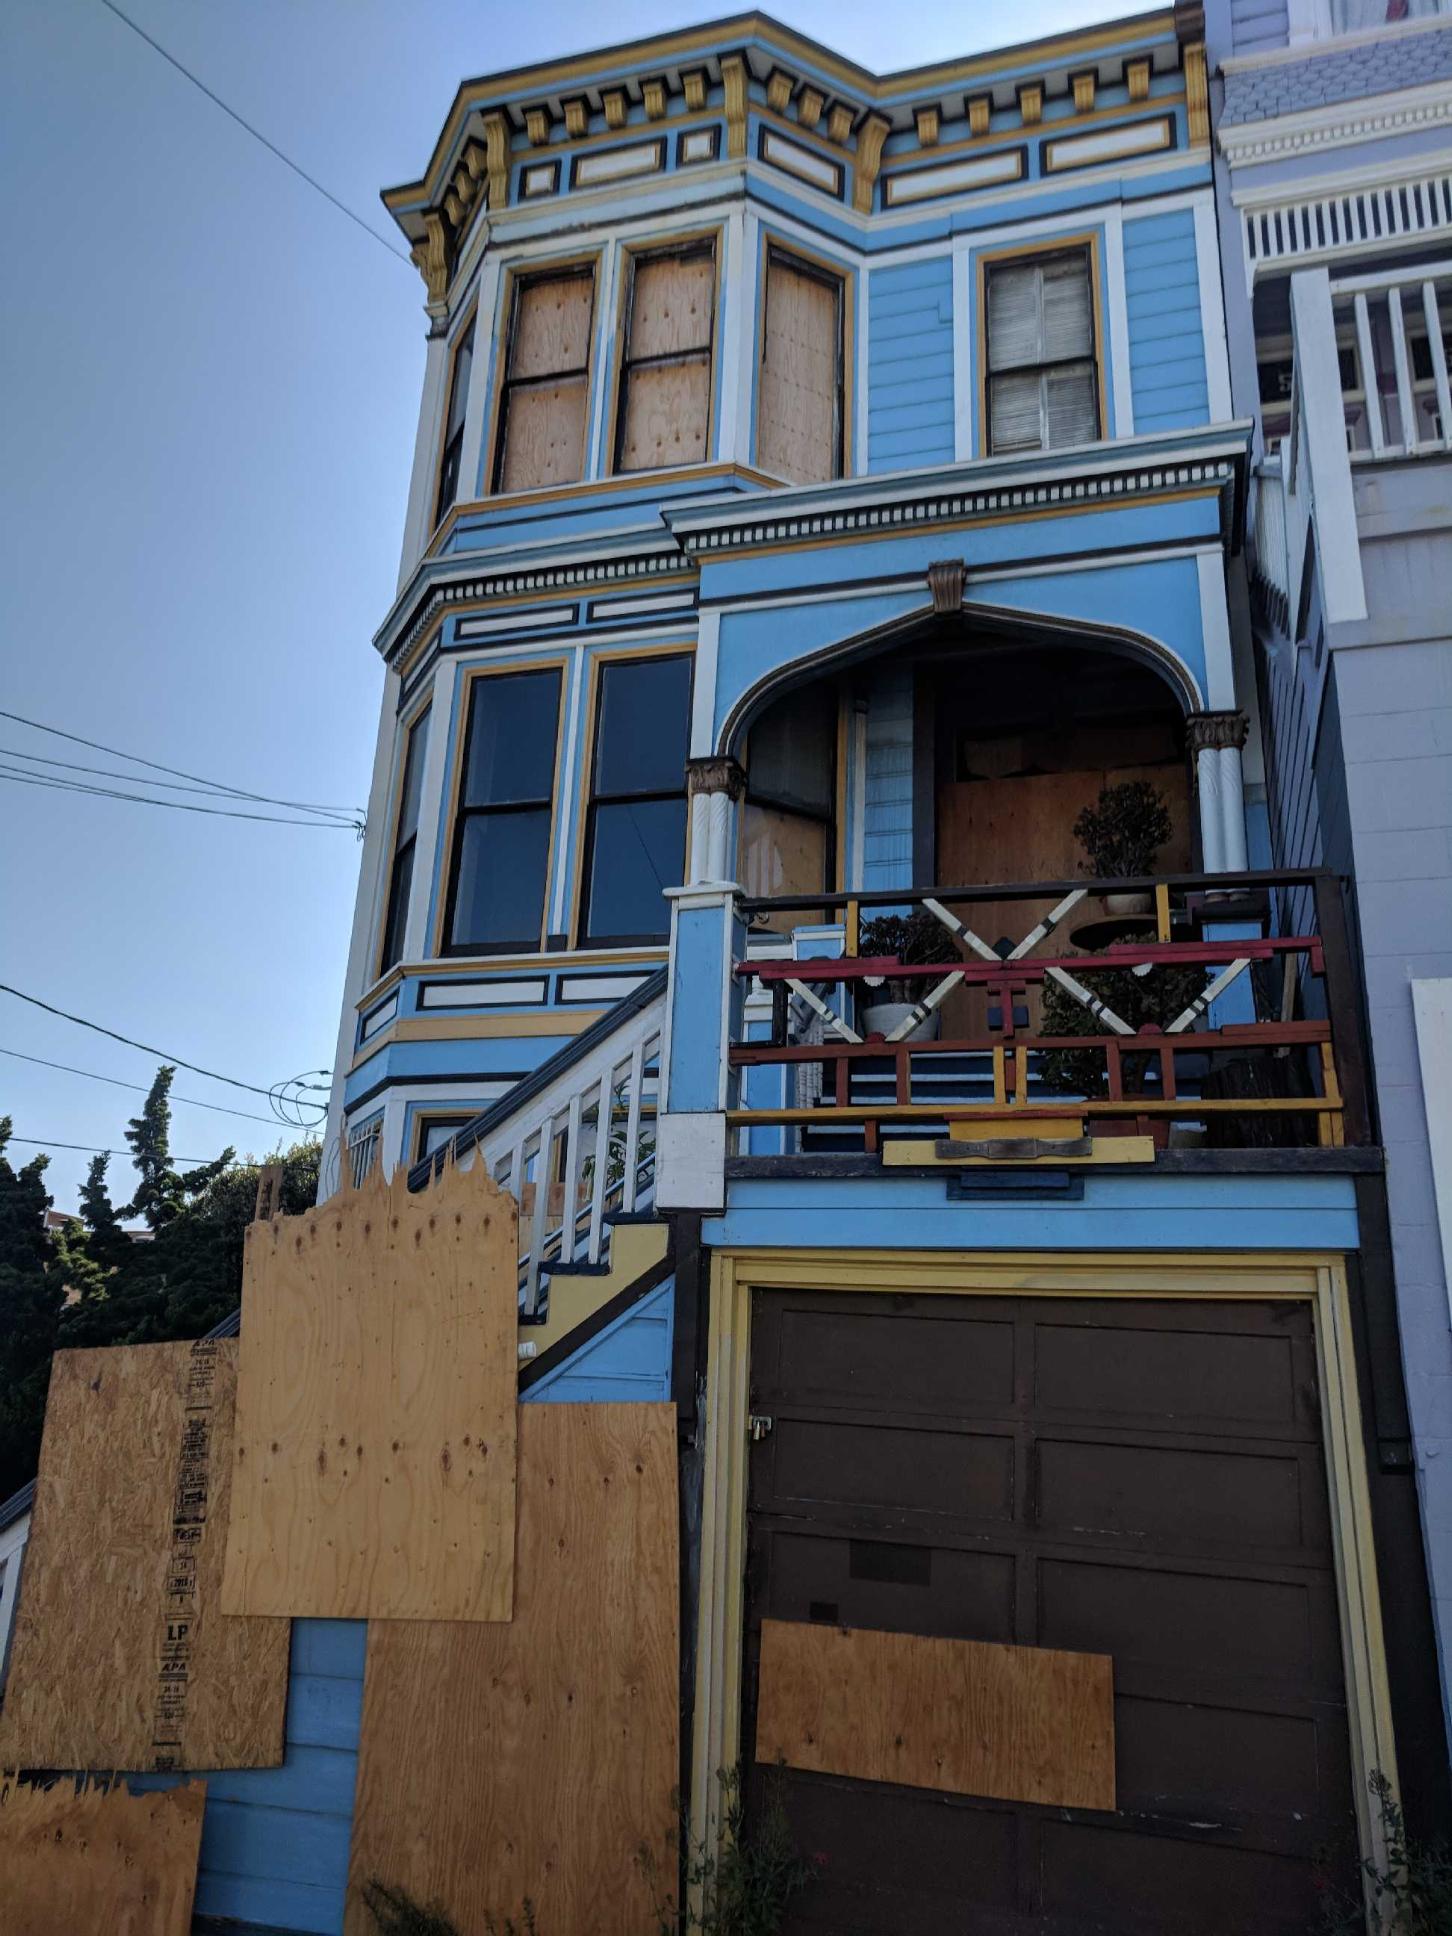 Fire-ravaged San Francisco home once labeled a 'drug den' sells for $2 million - SFGate